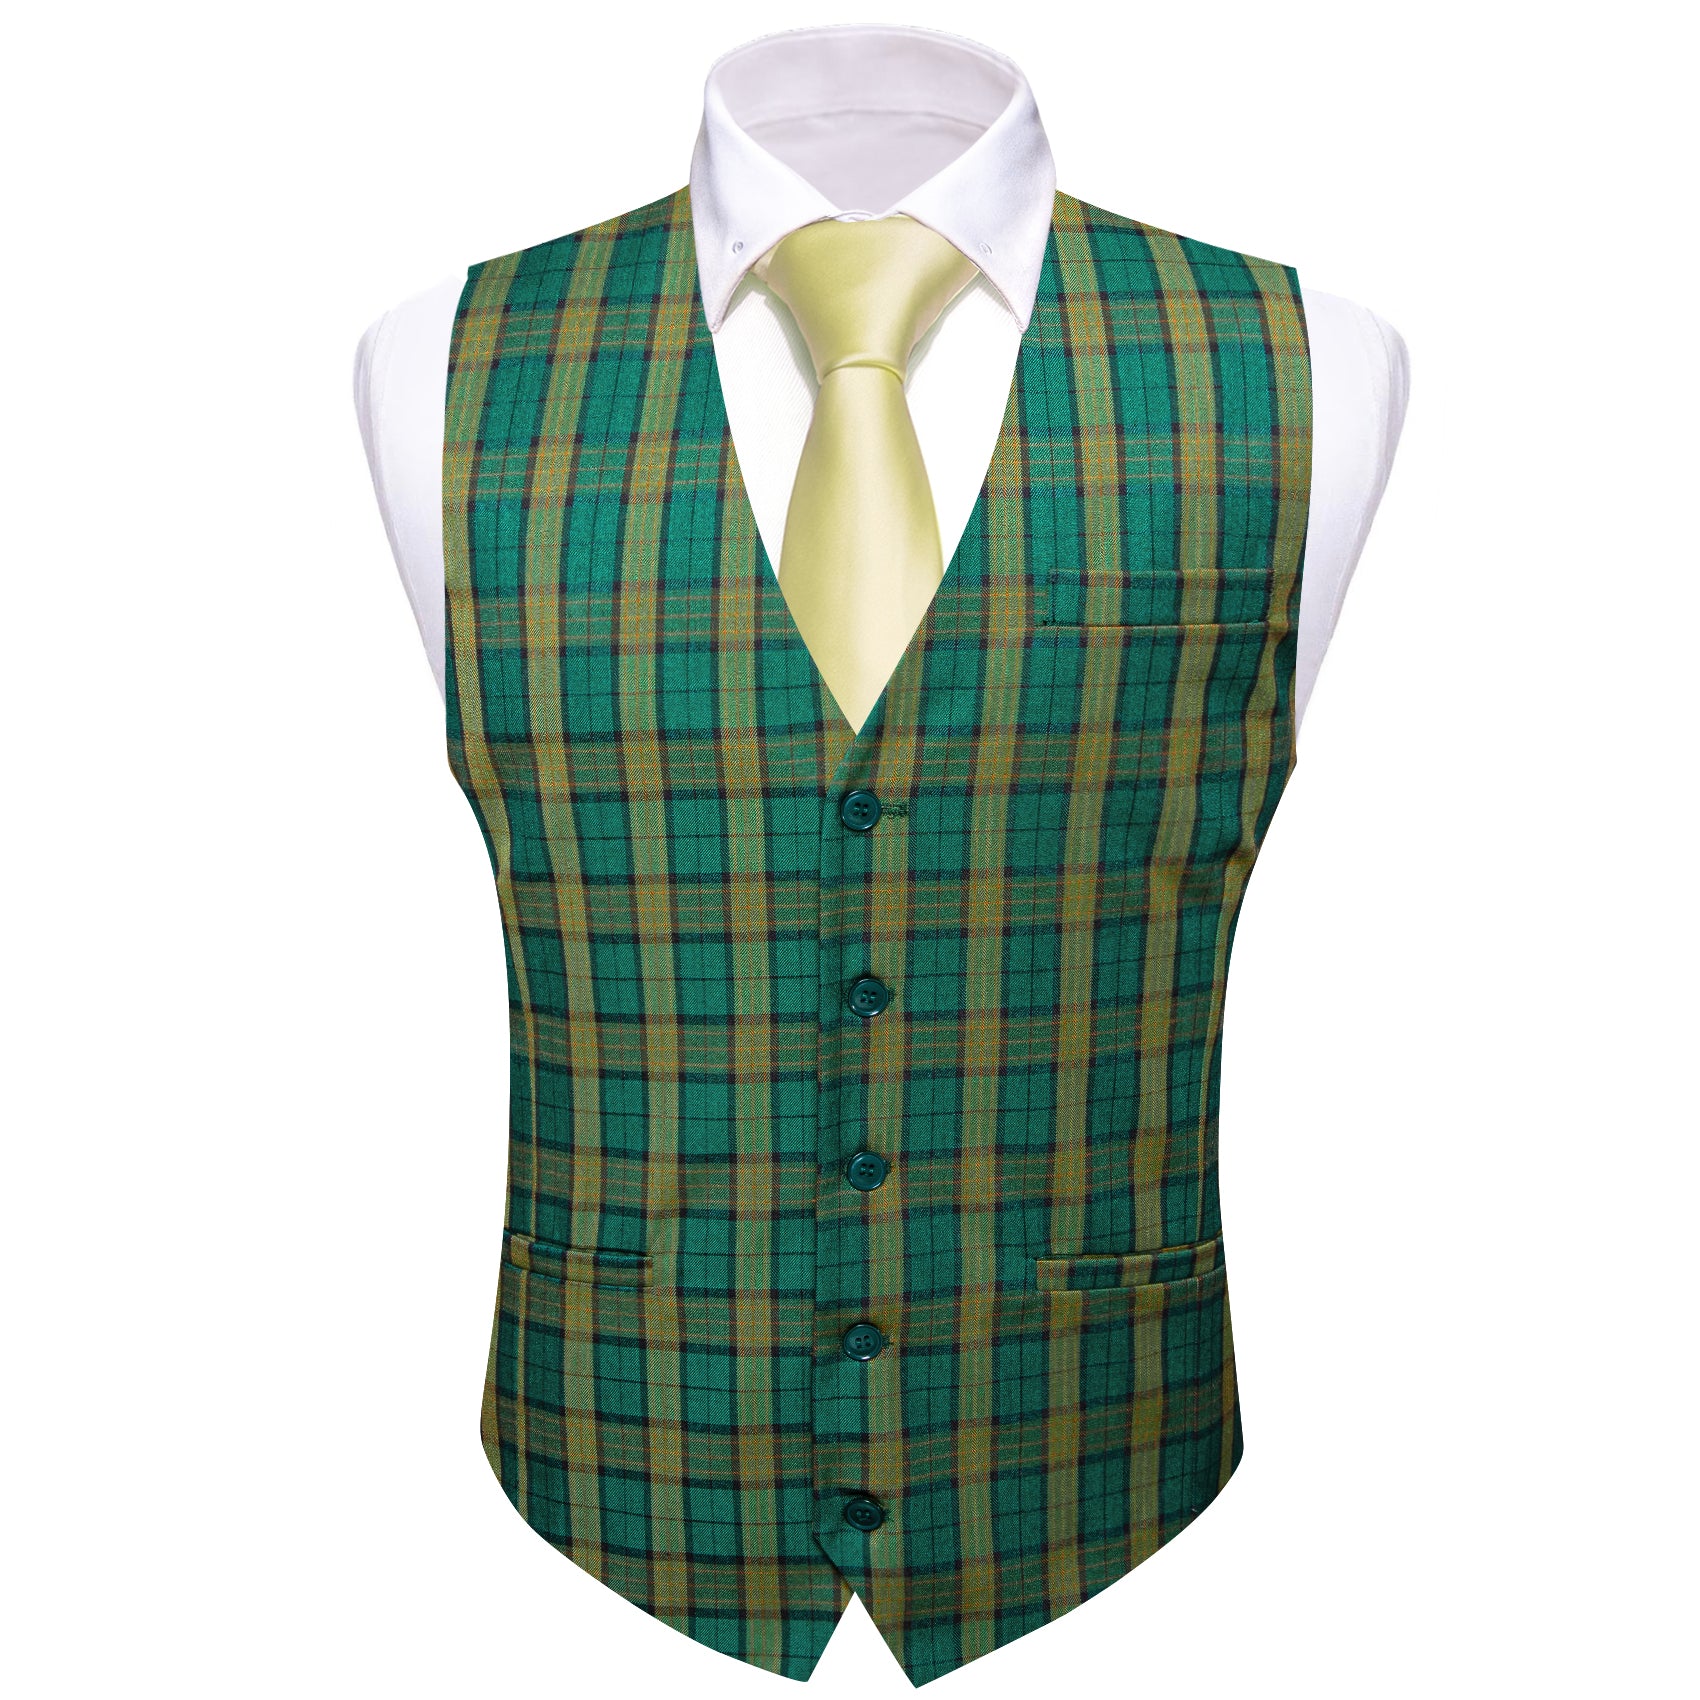 Barry.wang Men's Work Vest Green Yellow Plaid Waistcoat Vest